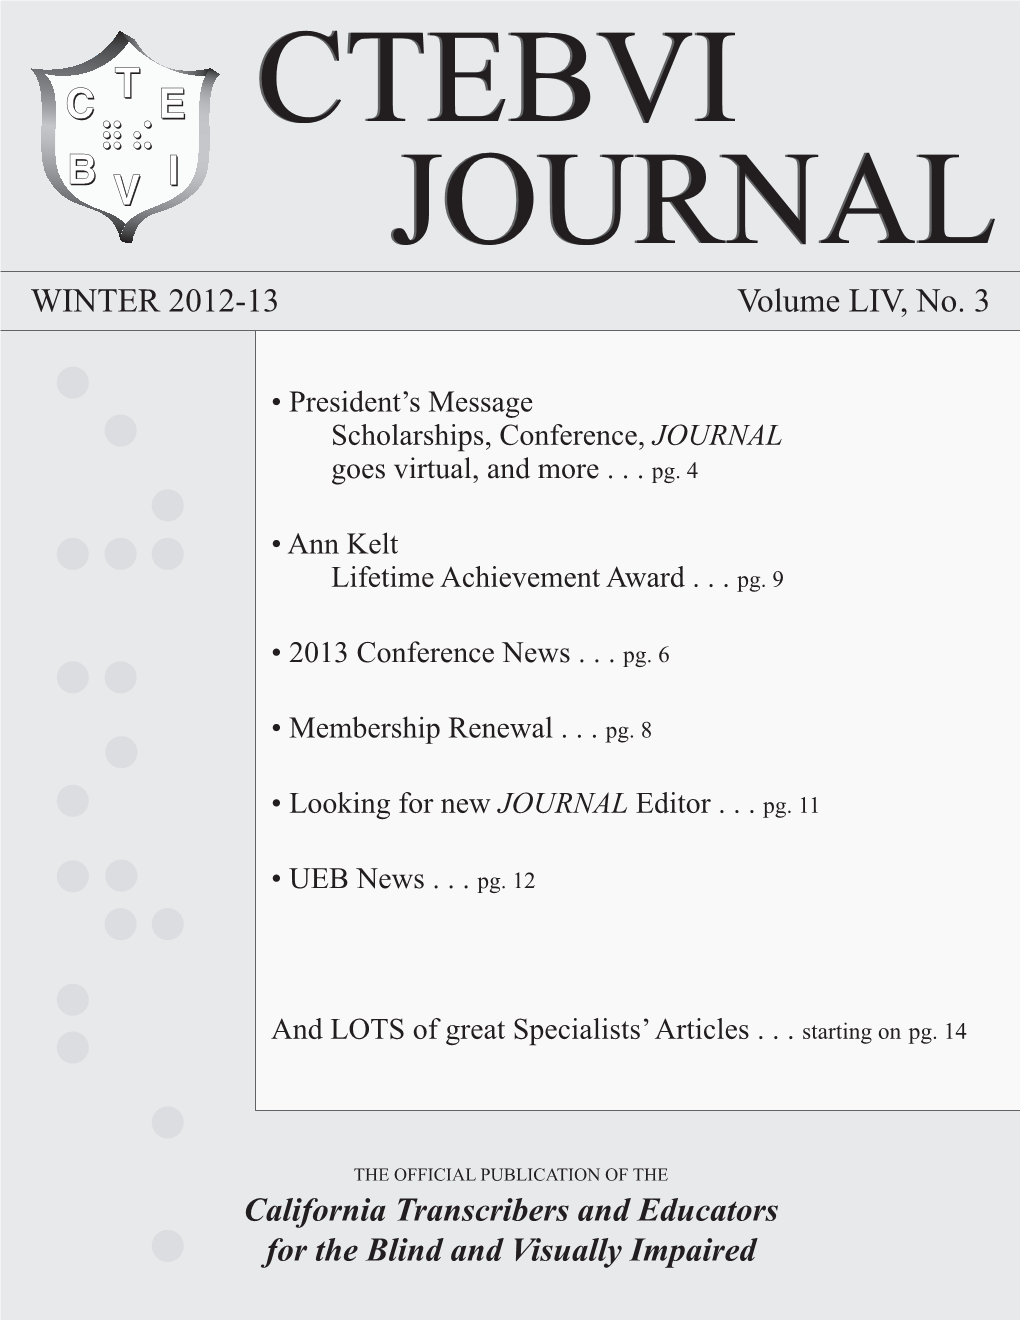 CTEBVI JOURNALJOURNAL WINTER 2012-13 Volume LIV, No